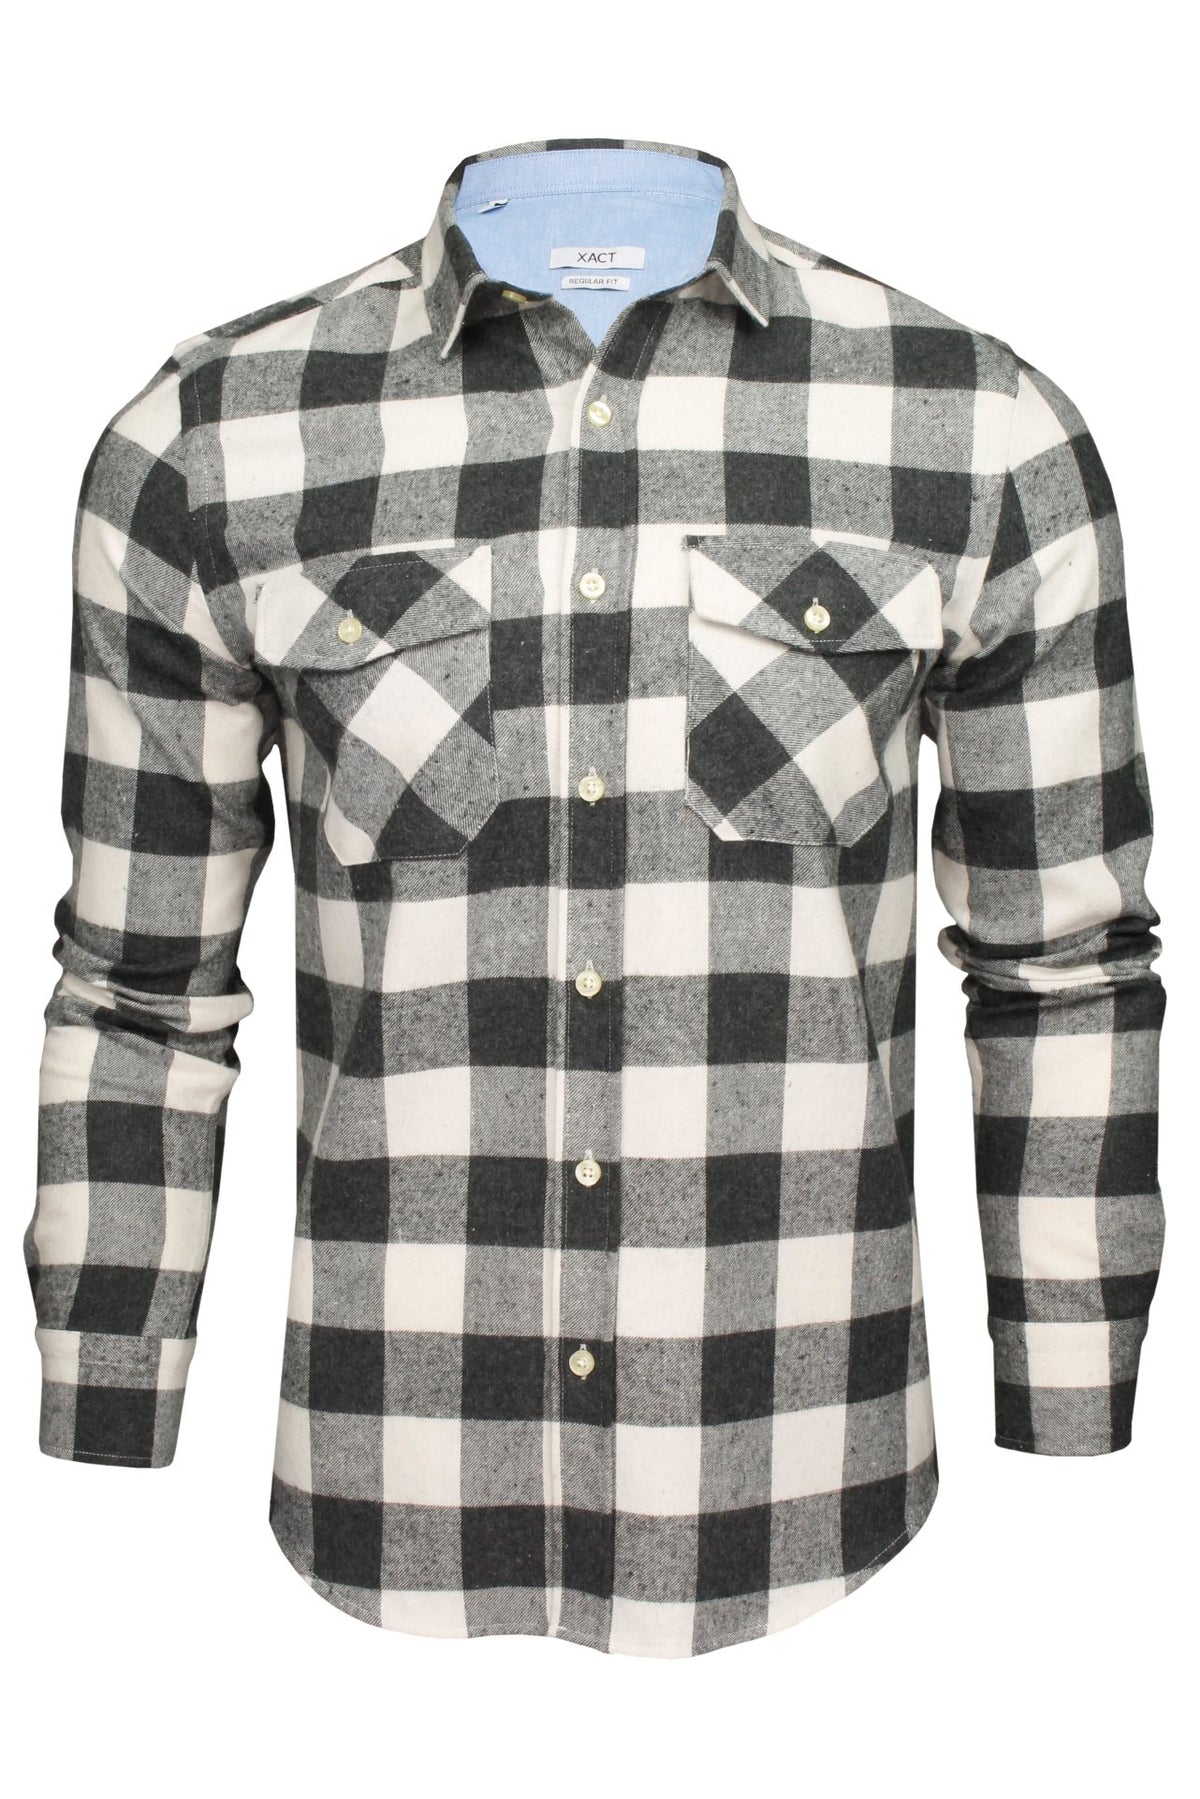 Xact Mens Soft Flannel Buffalo Check Shirt - Long Sleeved, 01, Xsh1136, Jack - Dark Grey/ White